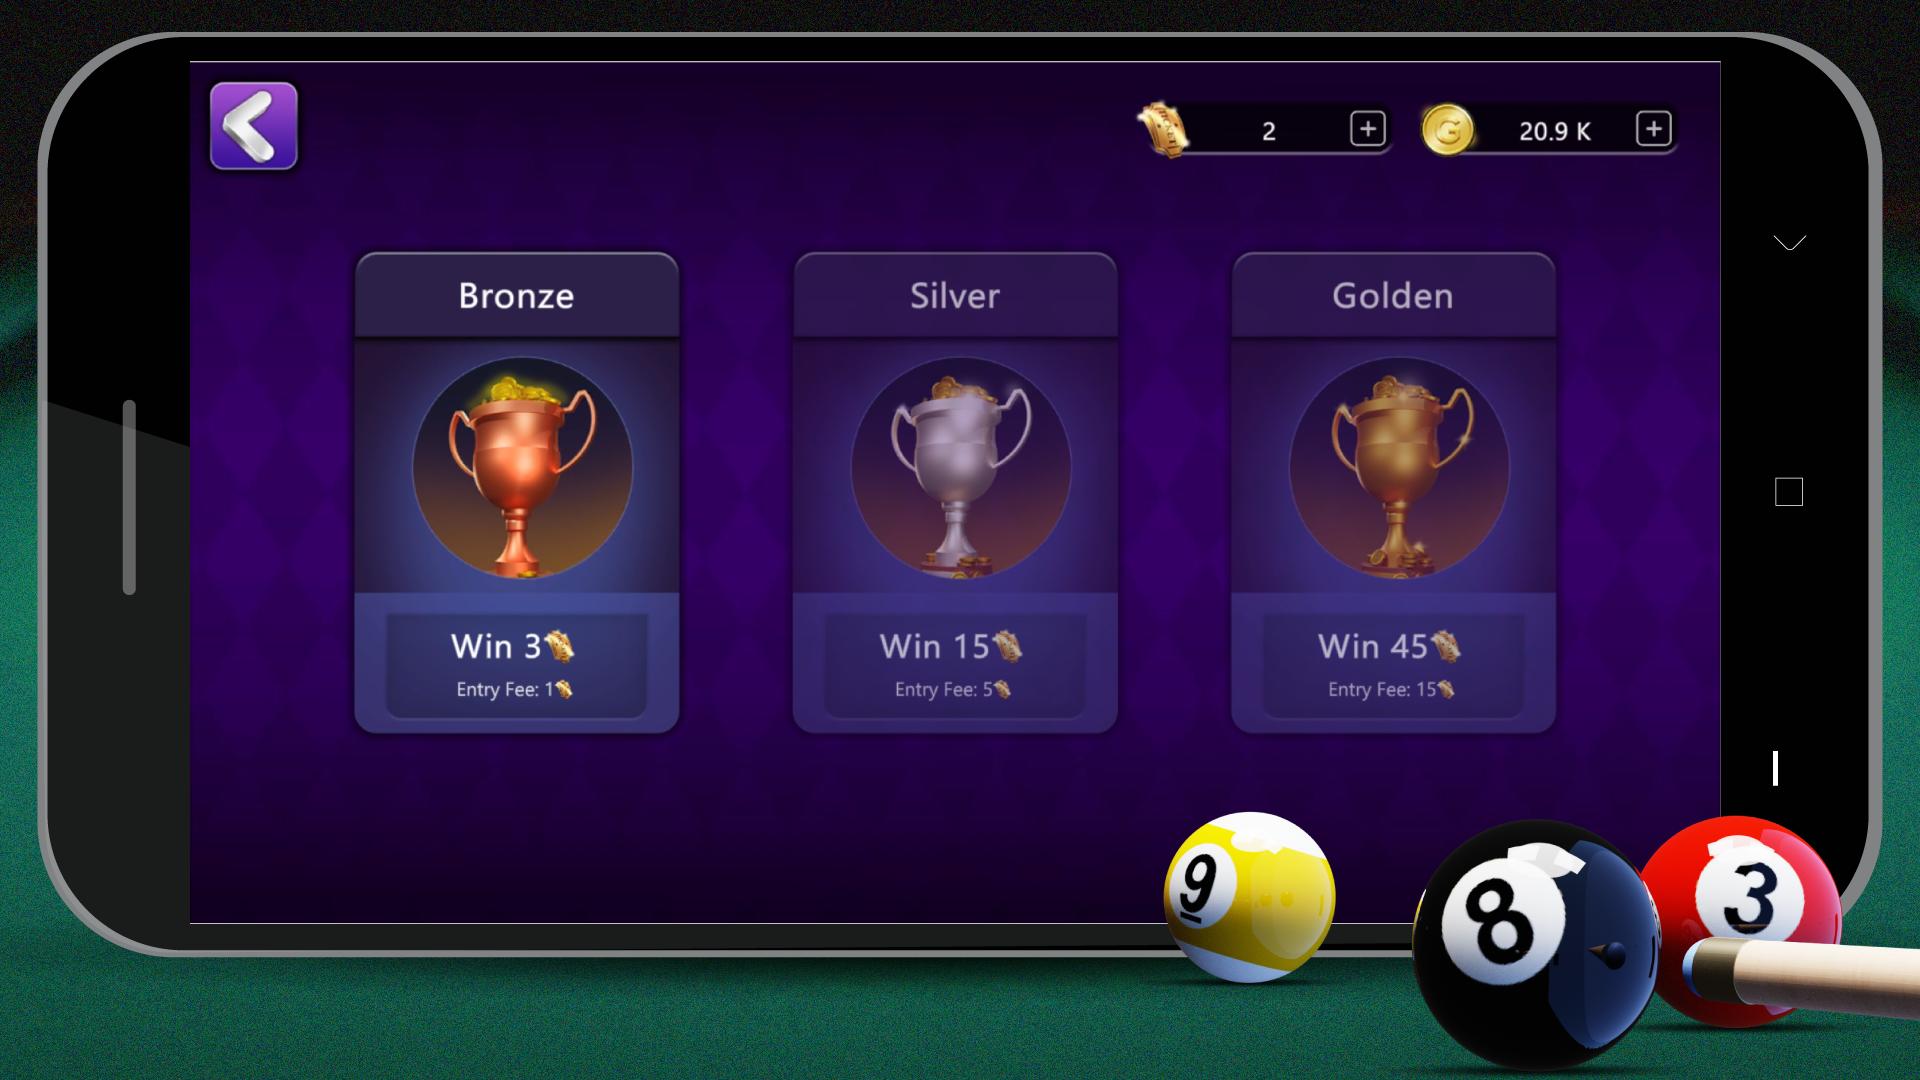 8 Ball Billiards- Offline Free Pool Game 1.51 Screenshot 7